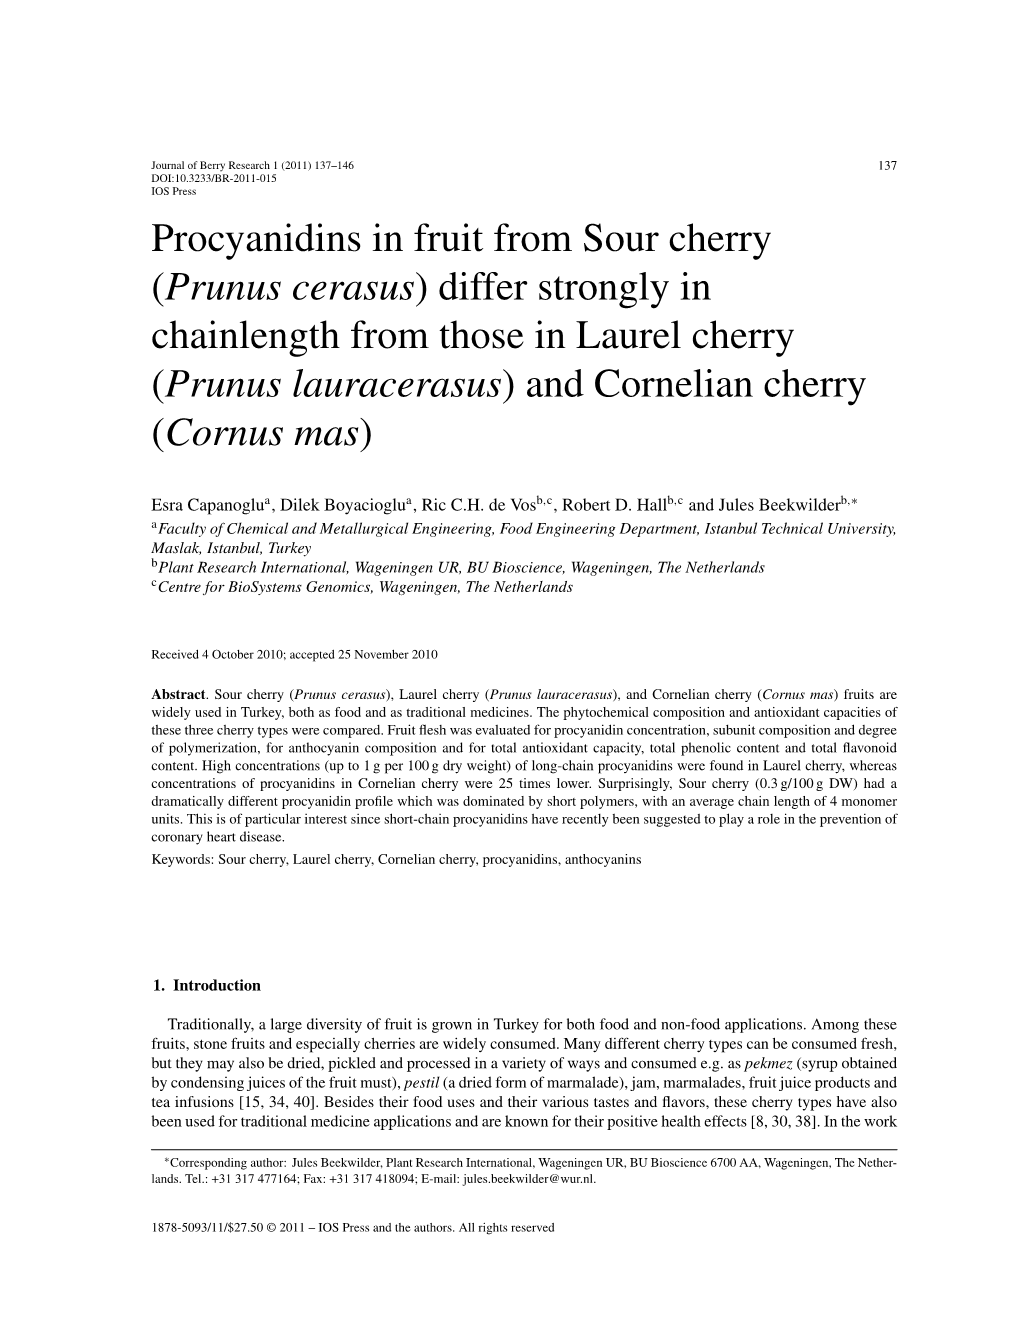 Procyanidins in Fruit from Sour Cherry (Prunus Cerasus)